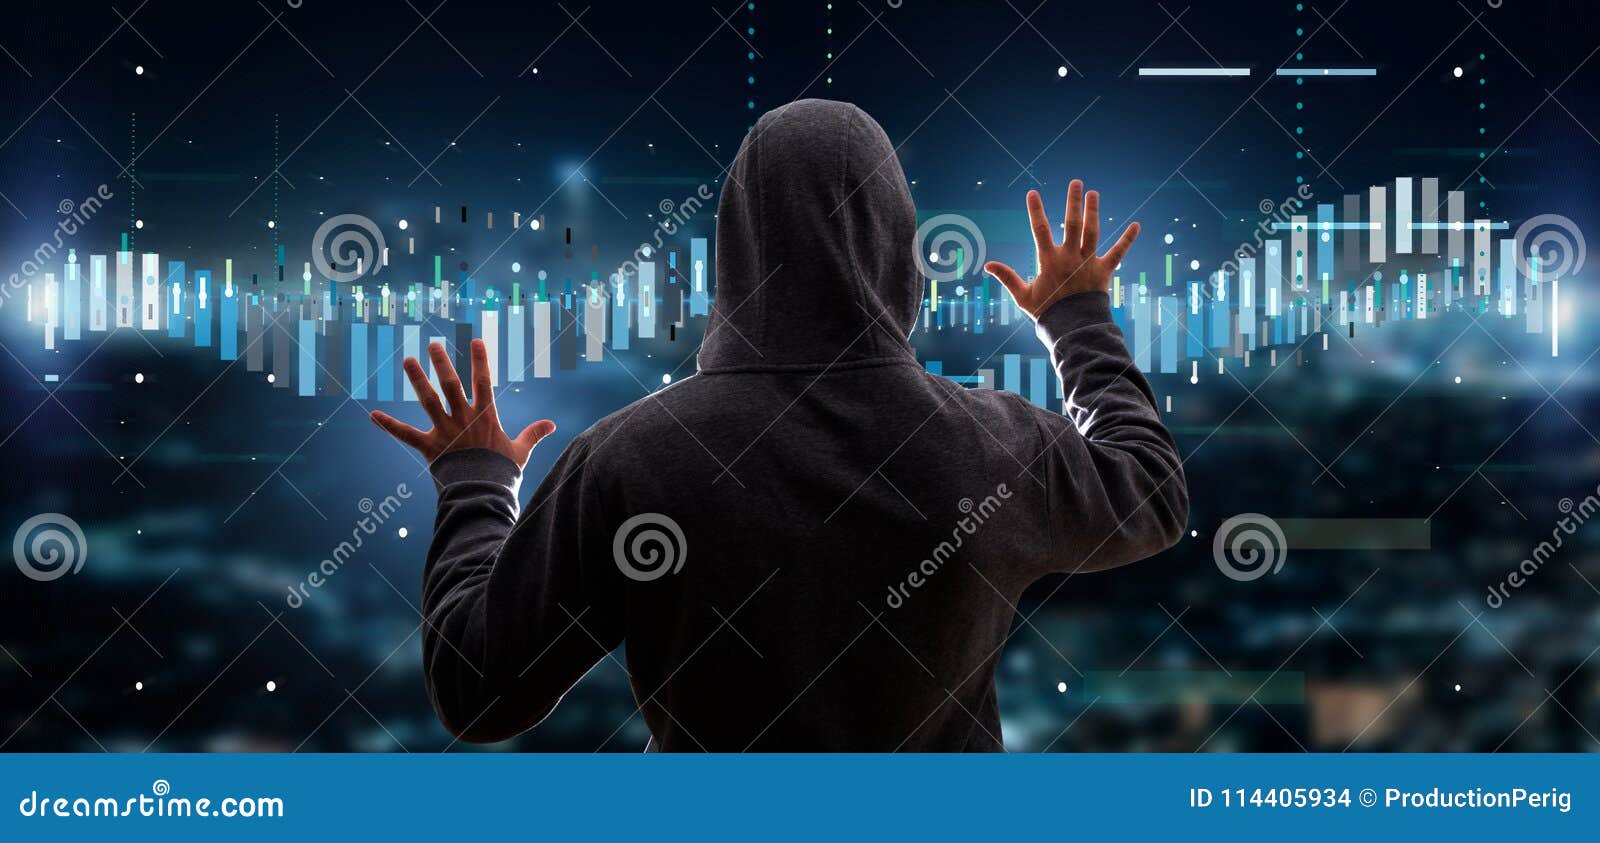 hacker activating business stock exchange trading data information